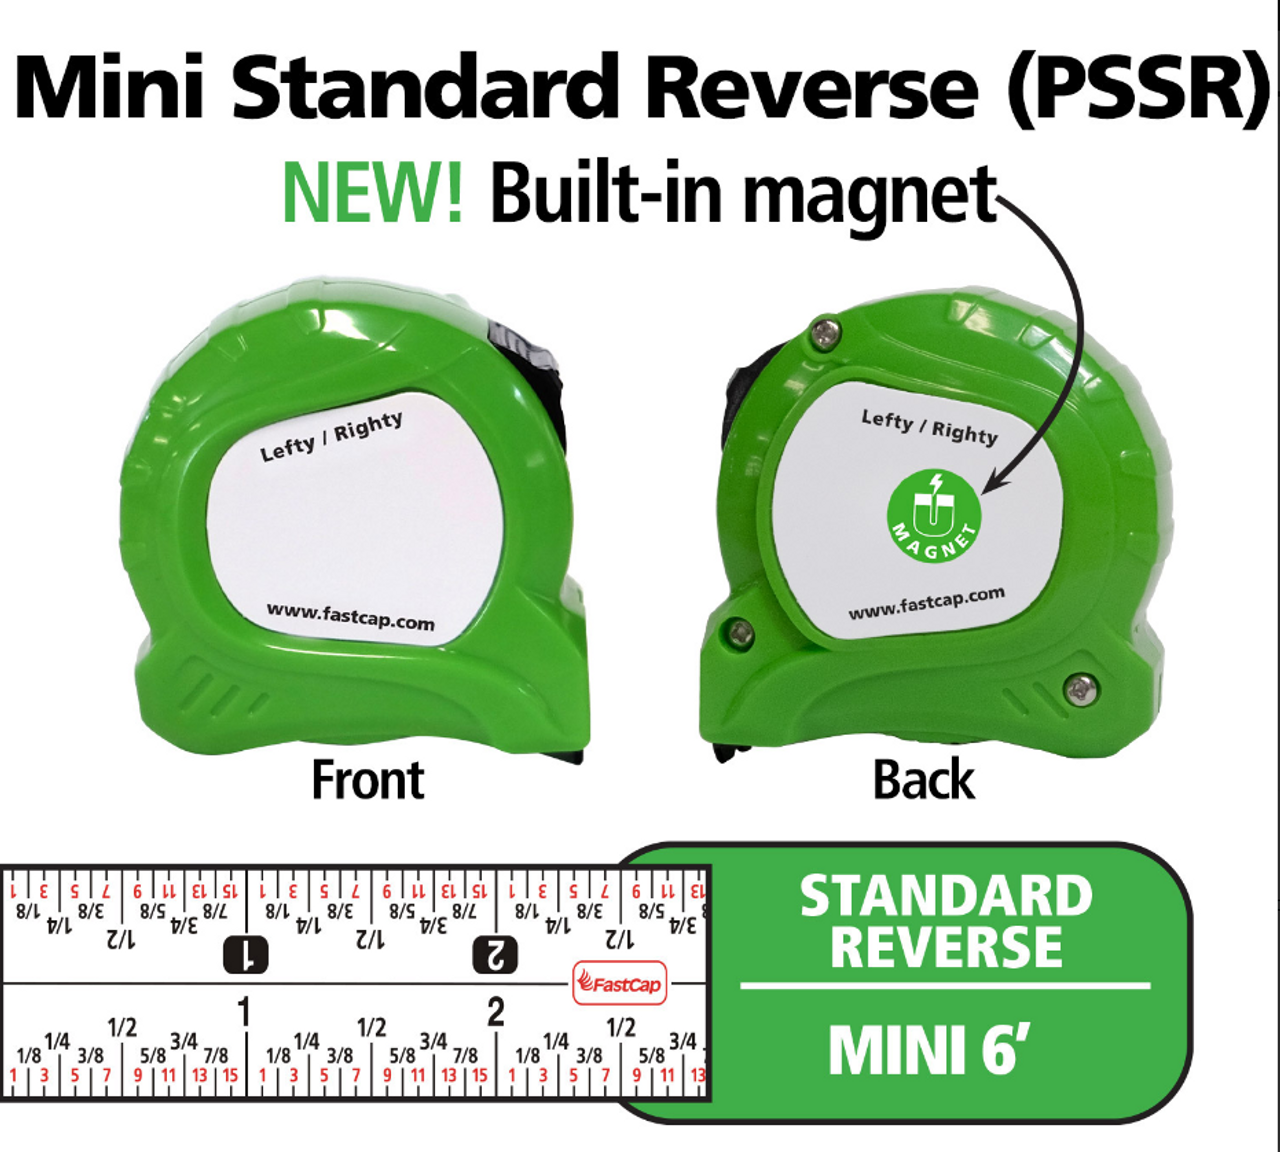 Fastcap PMS-12, Metric/Standard 12 feet Tape Measure